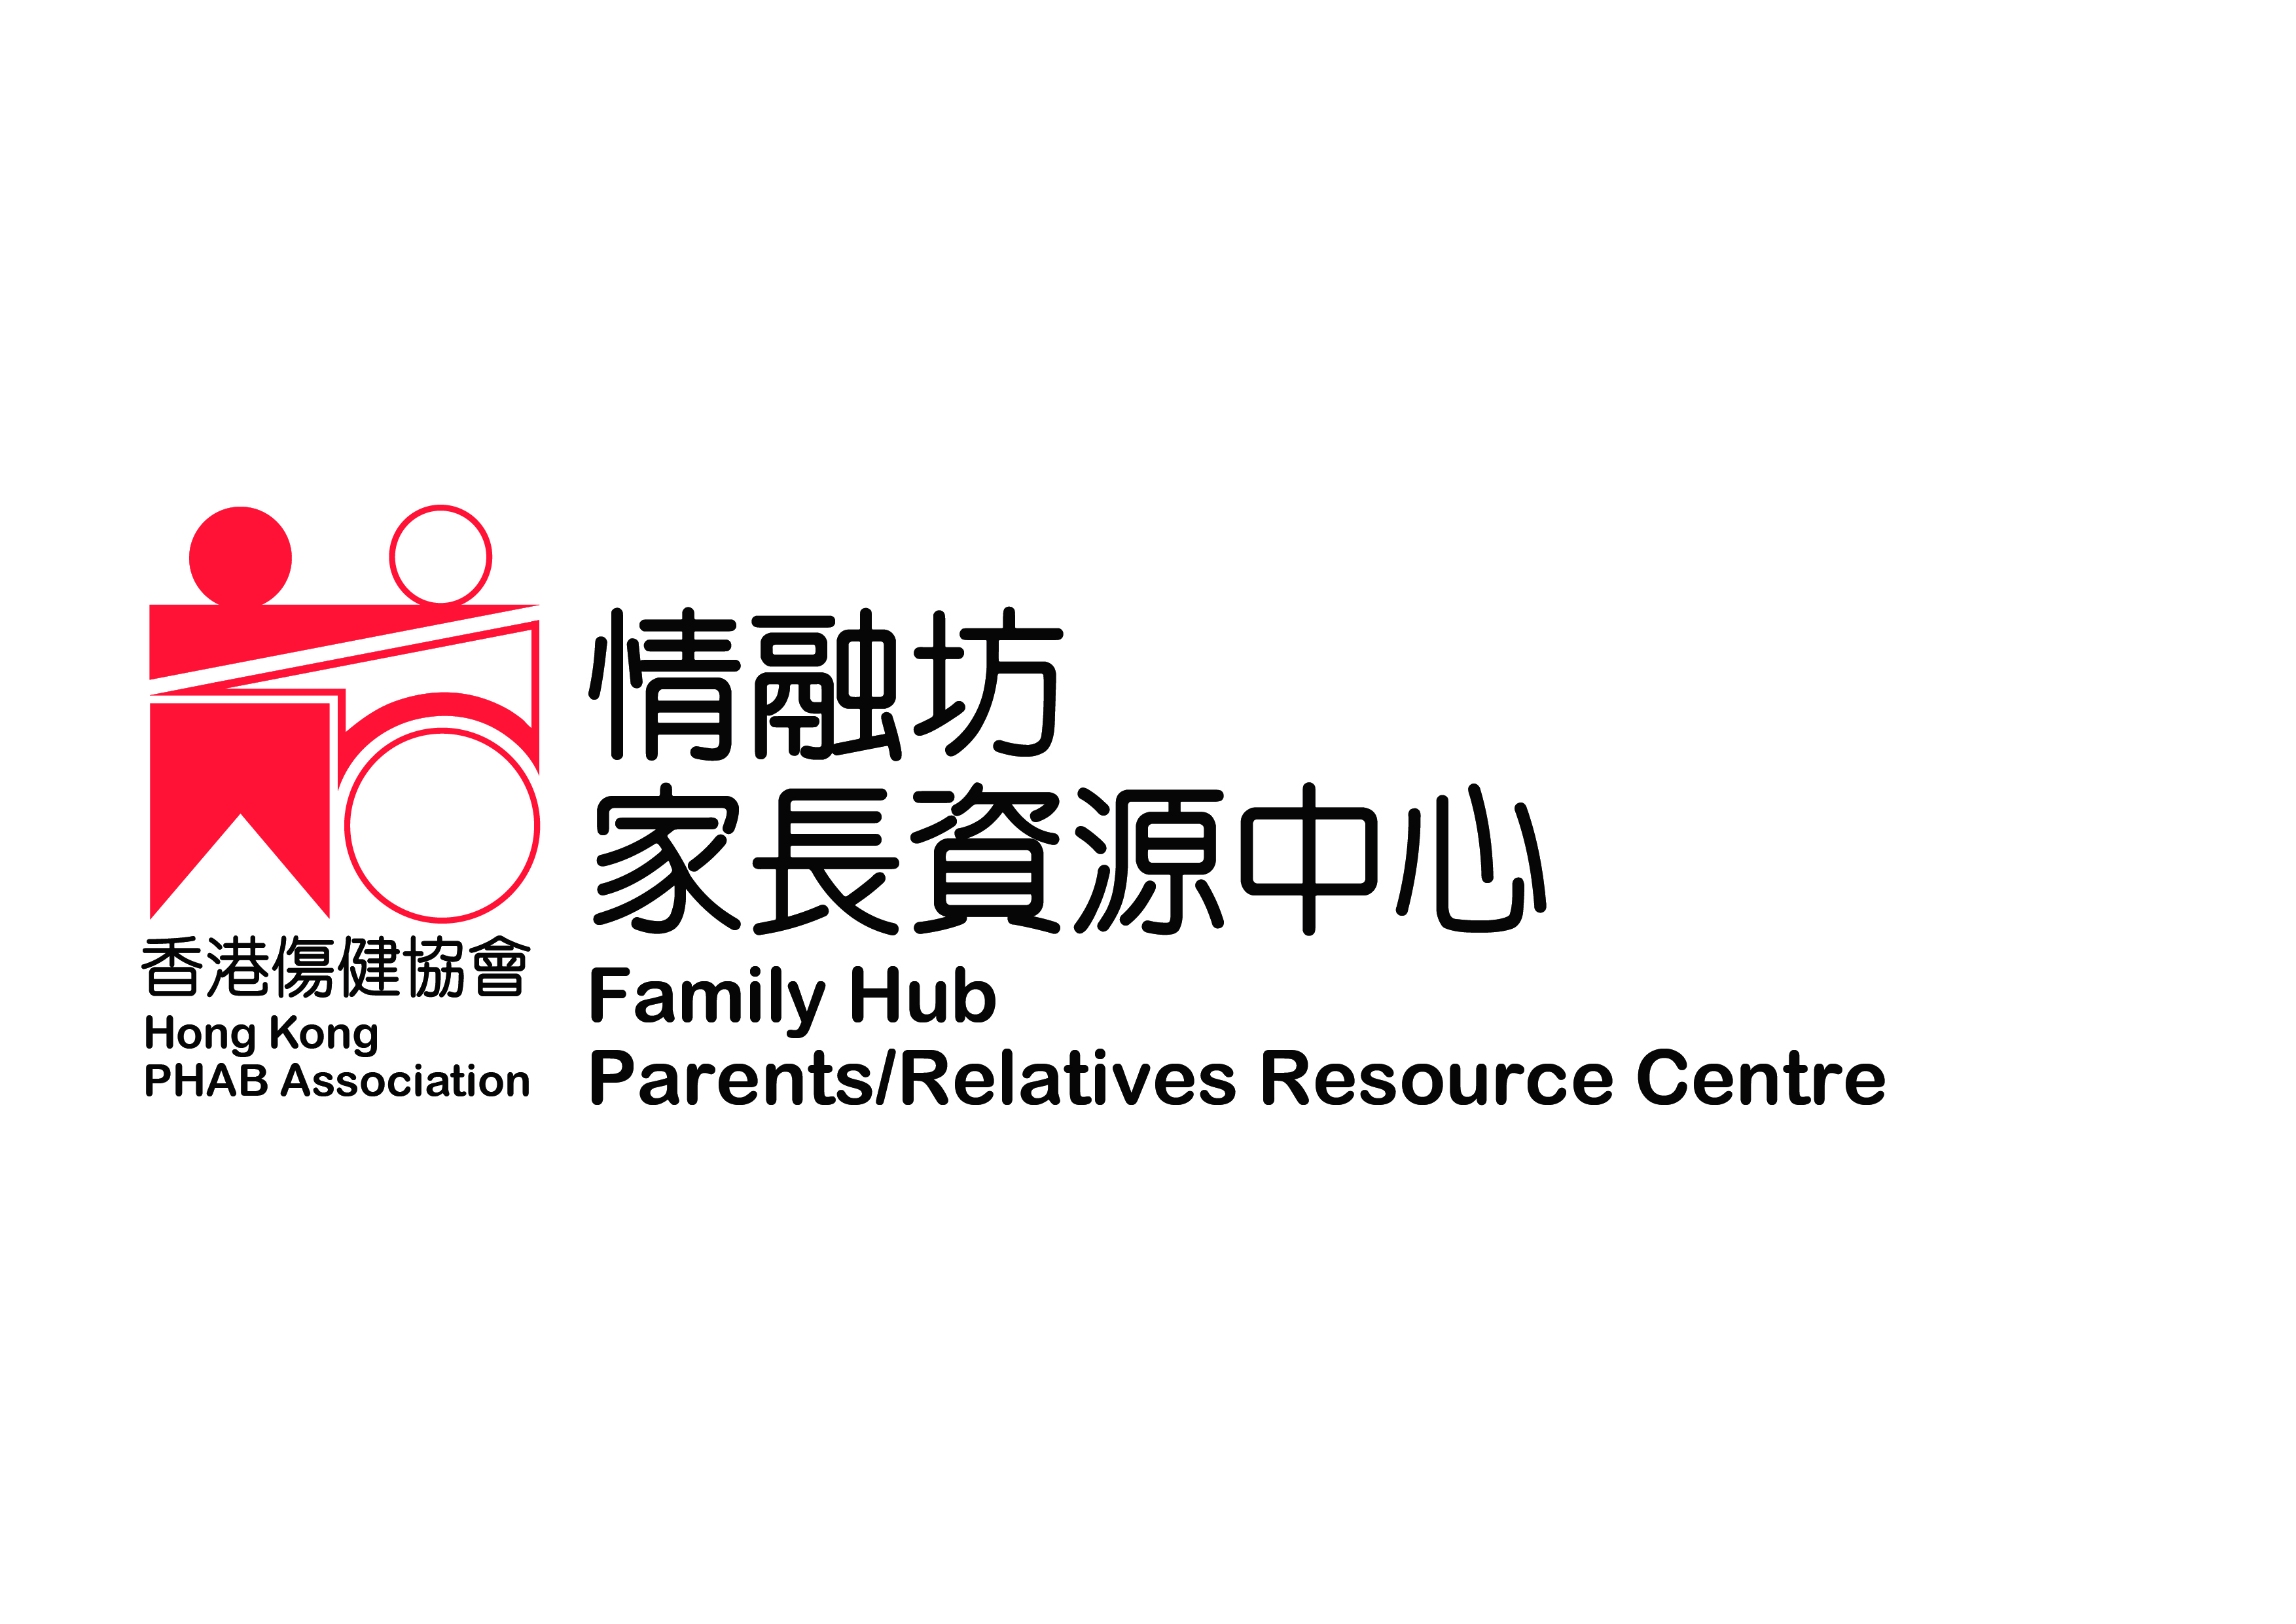 Hong Kong PHAB Association Family Hub Parents/Relatives Resource Centre